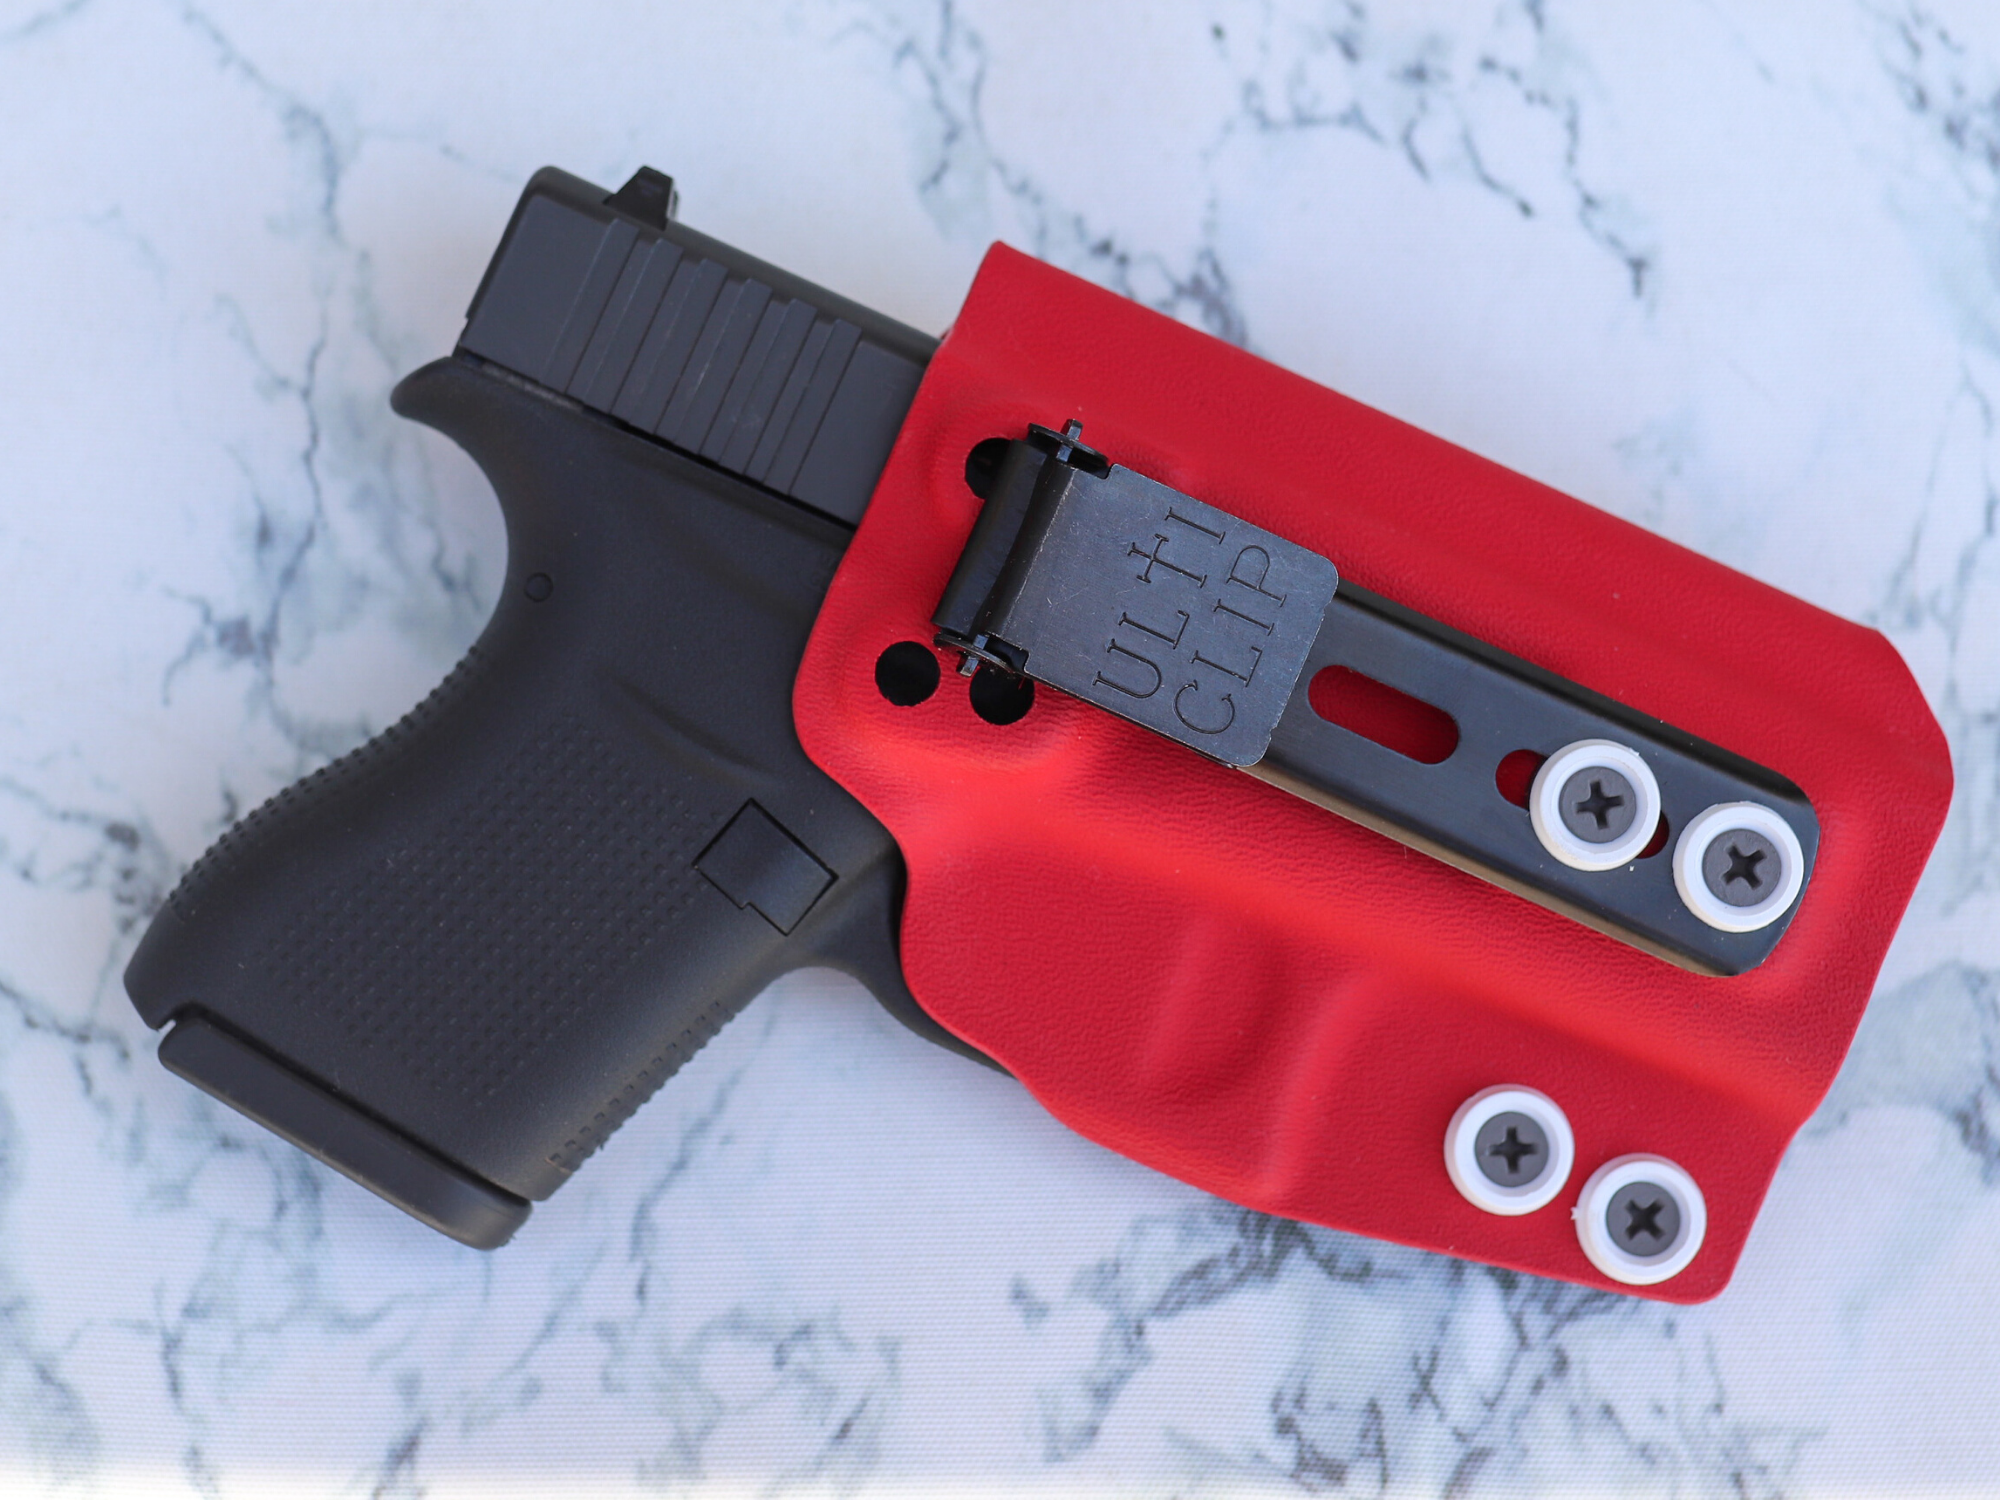 Ulti-Clip® Trigger Guard & IWB Attachment Kit – Dene Adams